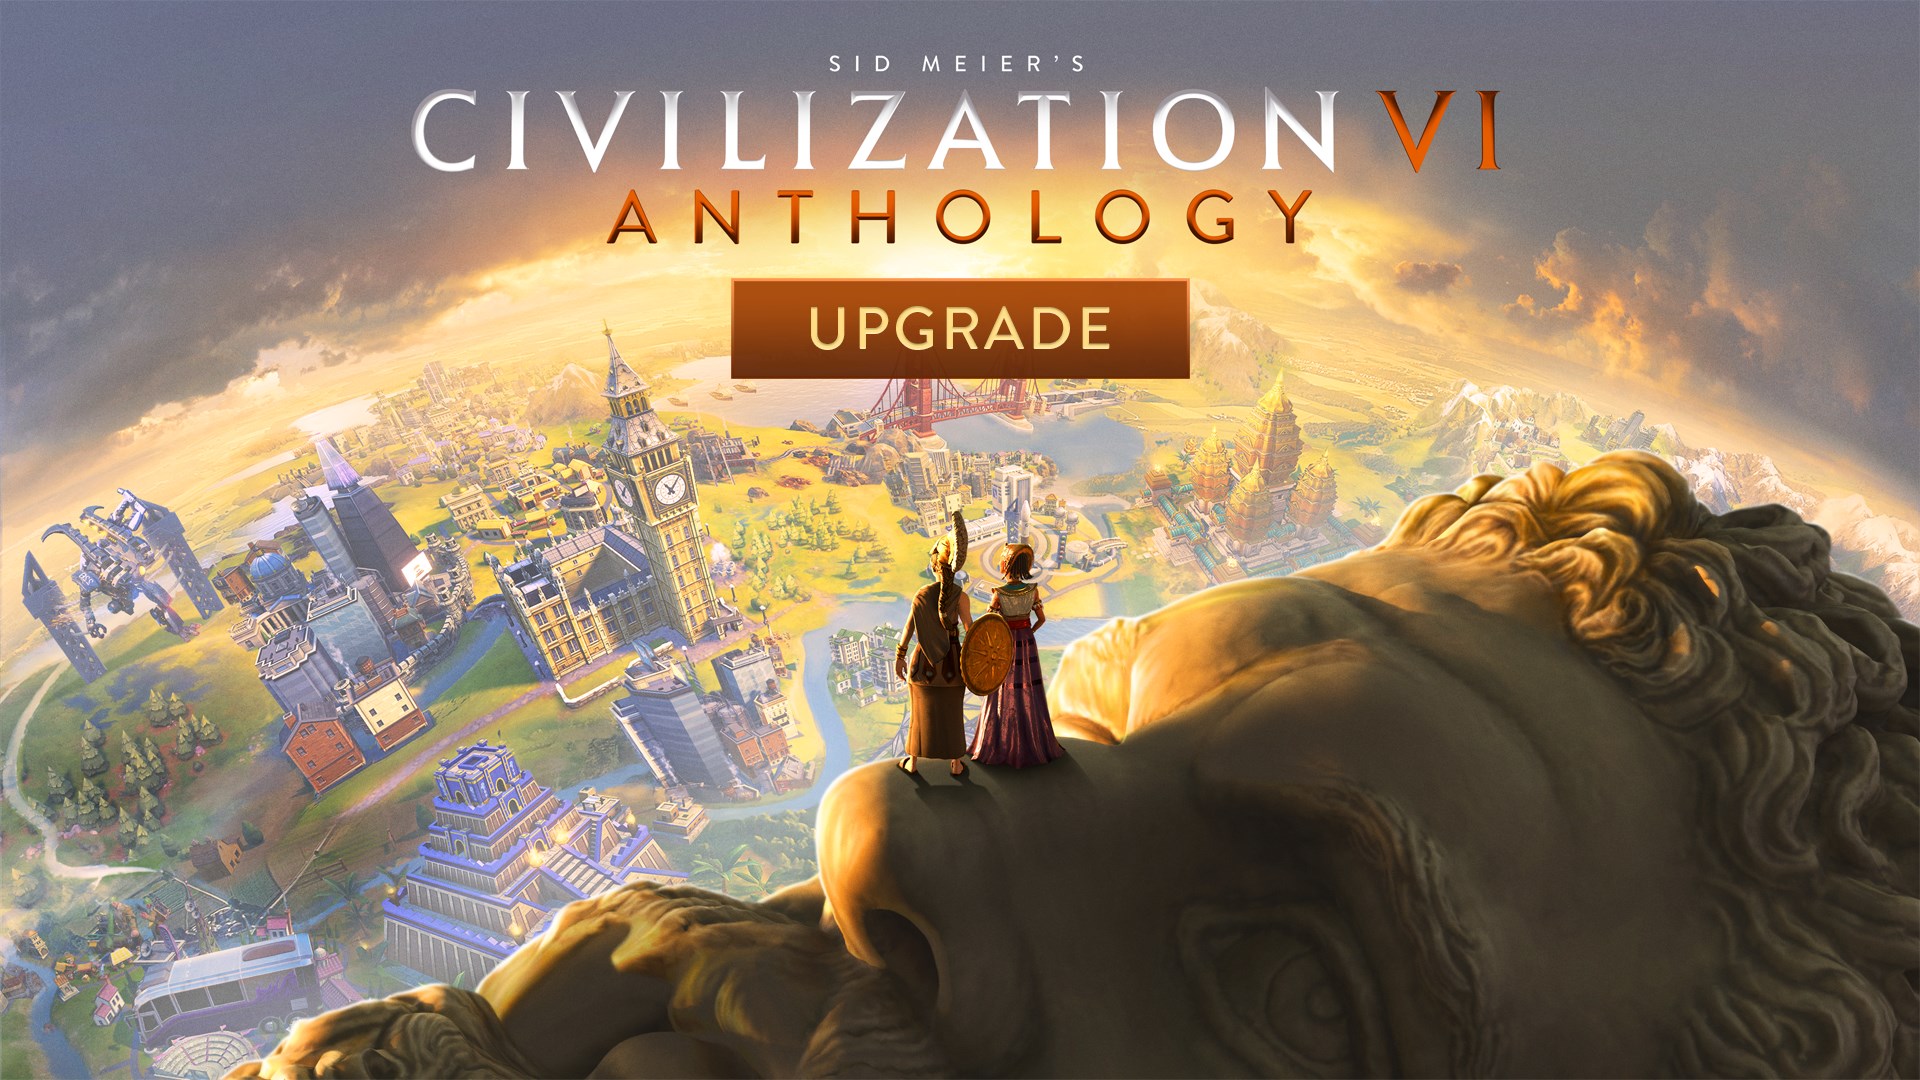 Pacote Sid Meier's Civilization VI Anthology Upgrade